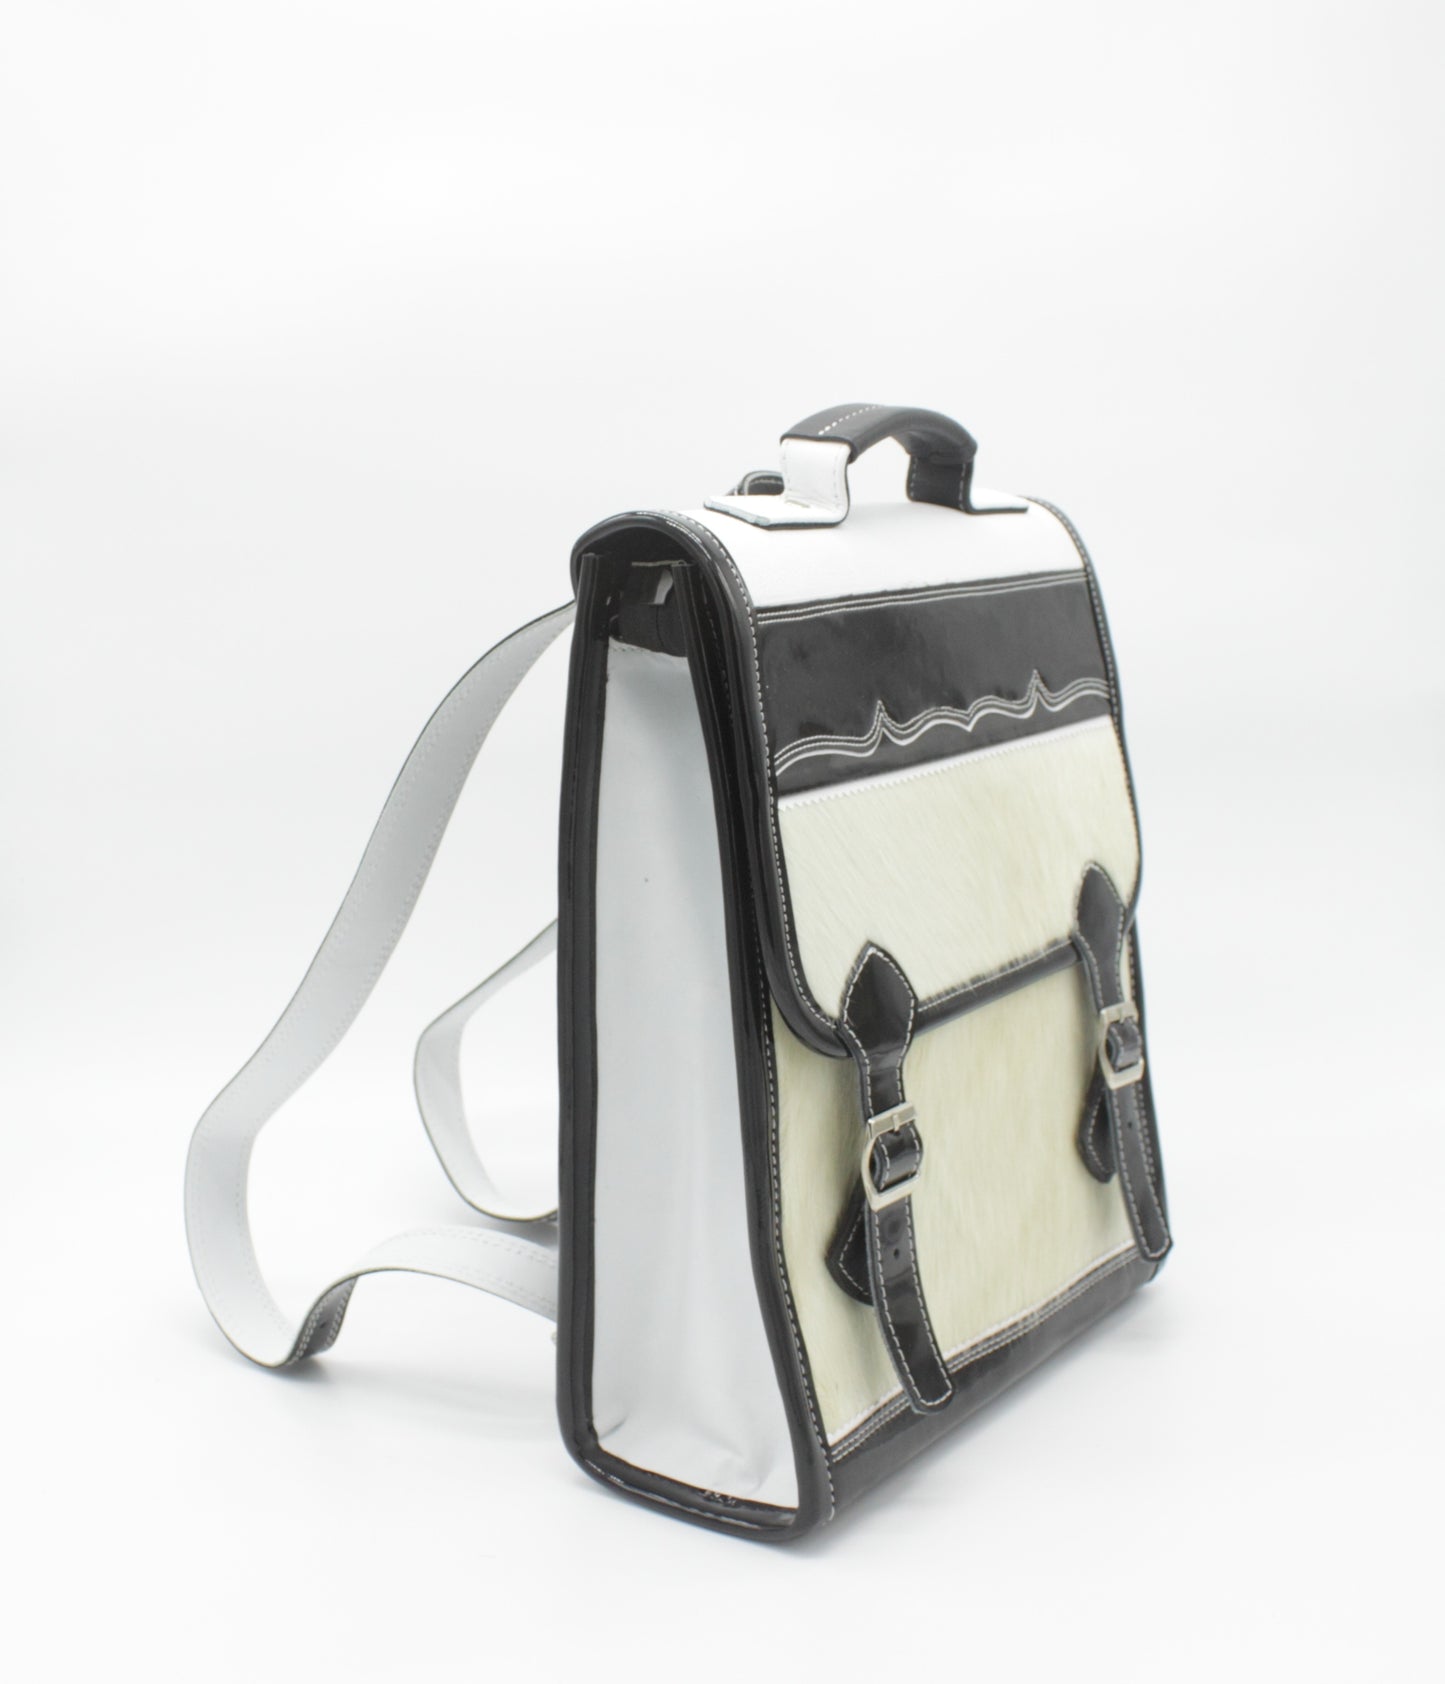 calf hair luxury handmade handbag backpack side